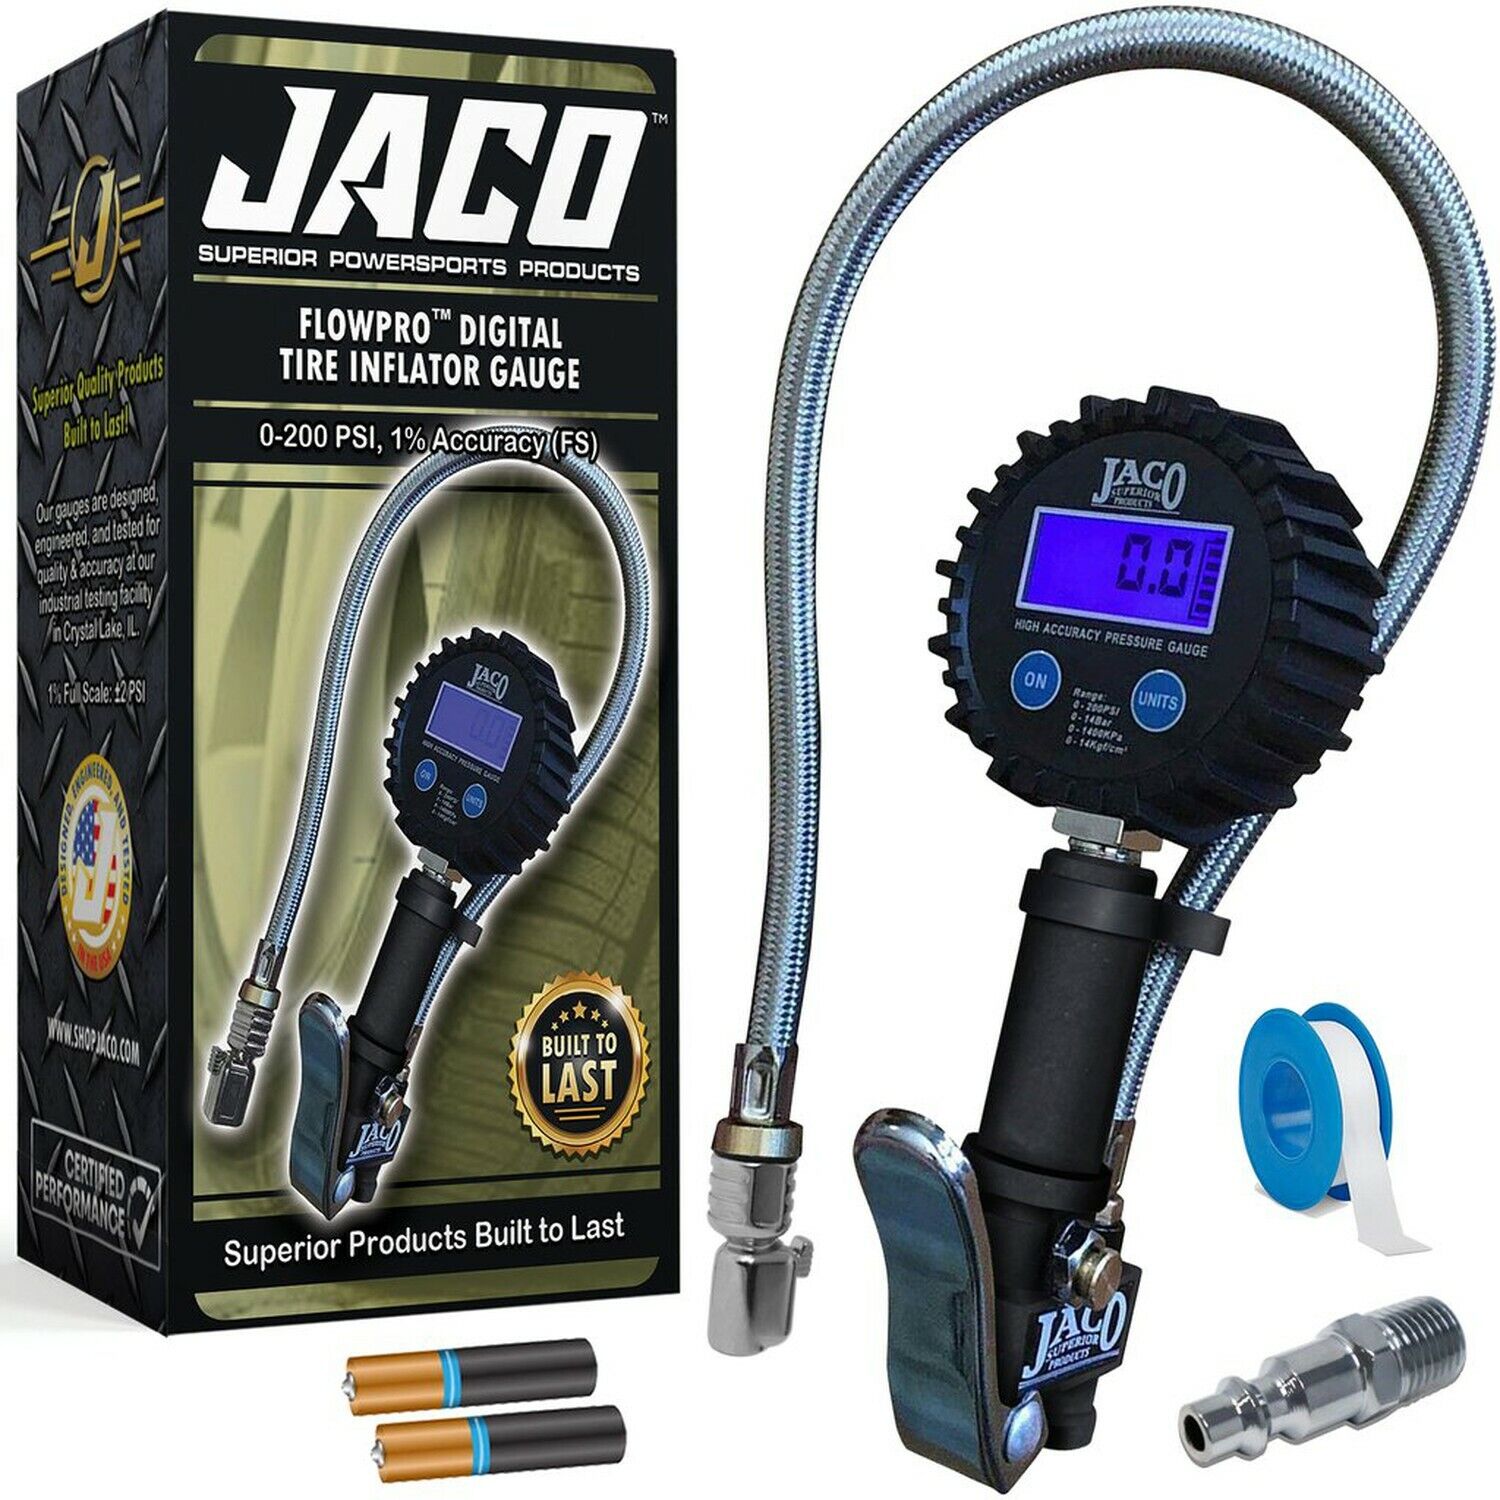 JACO FlowPro Digital Tire Inflator Gauge - 200 PSI